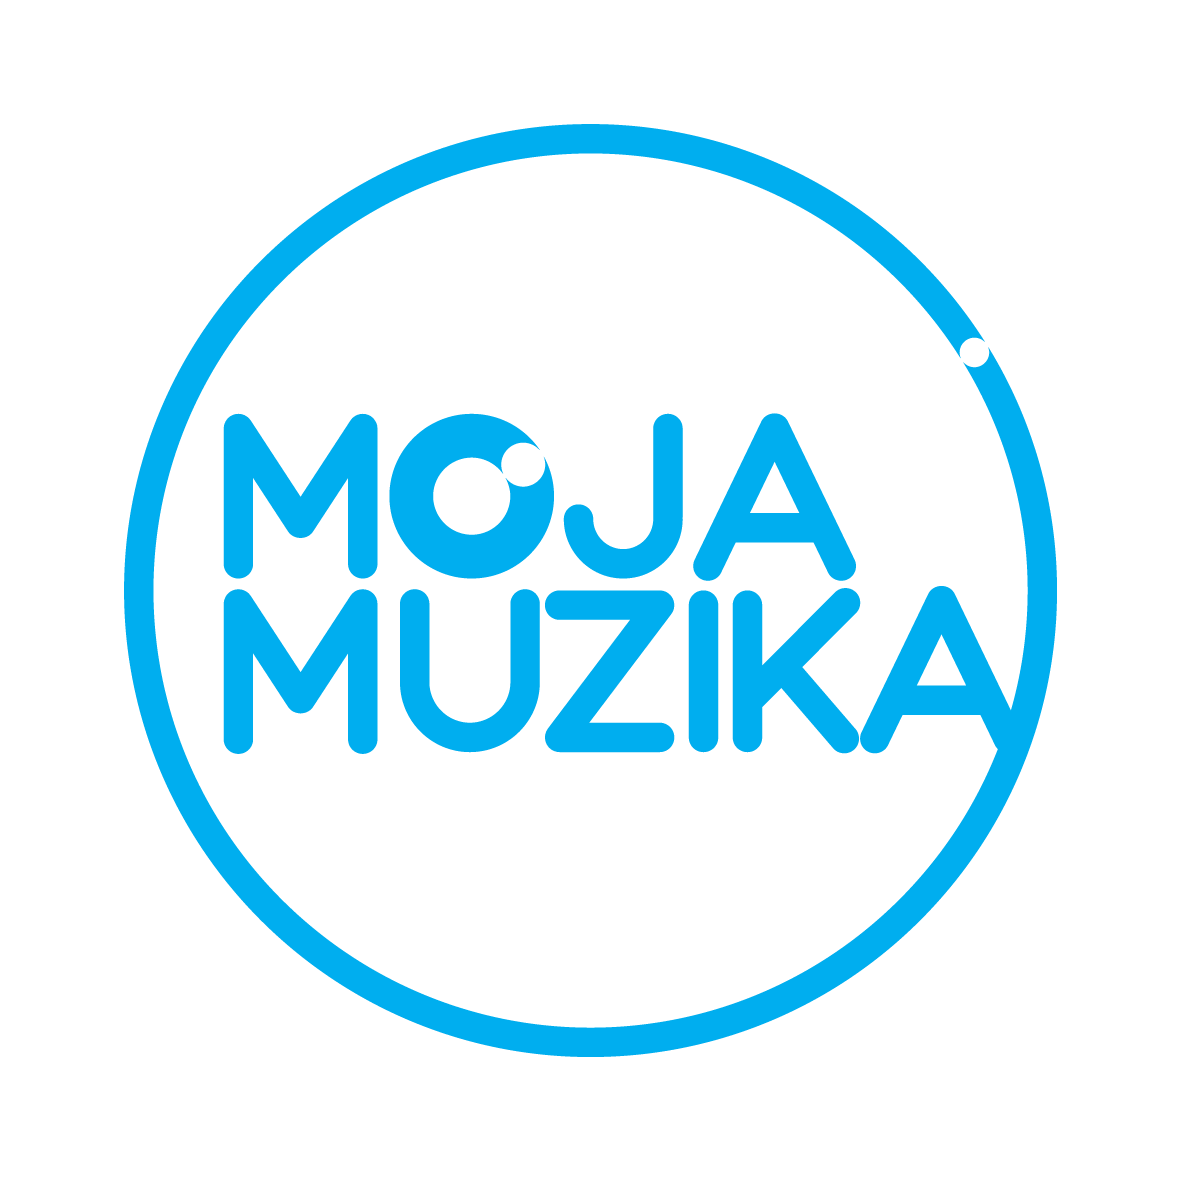 MOJAMUZIKA.sk